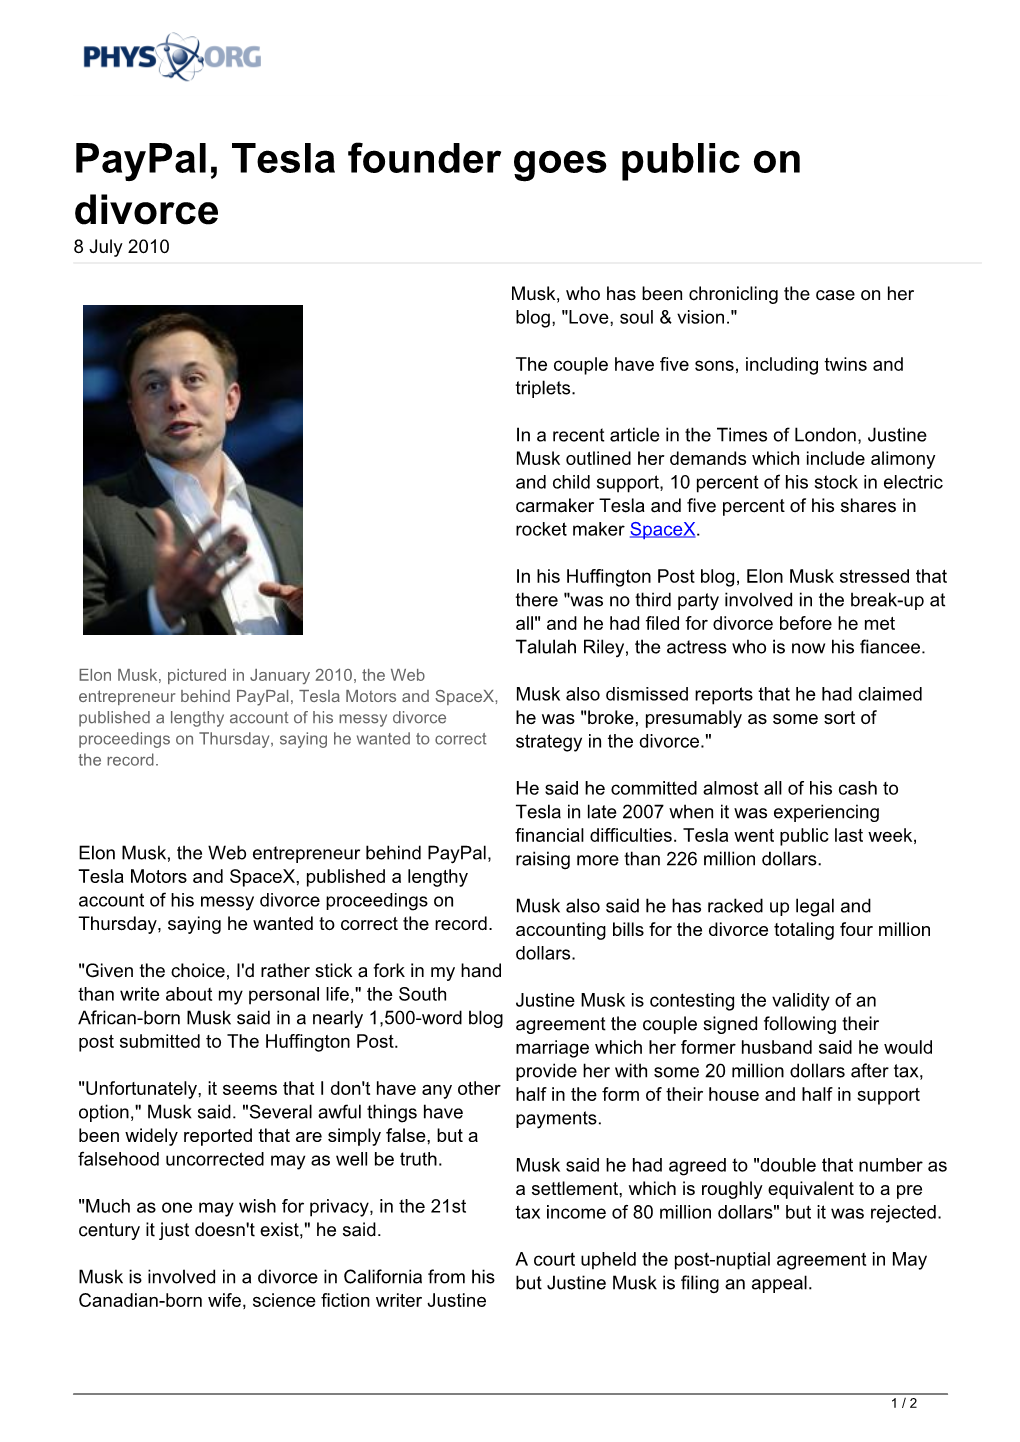 Paypal, Tesla Founder Goes Public on Divorce 8 July 2010